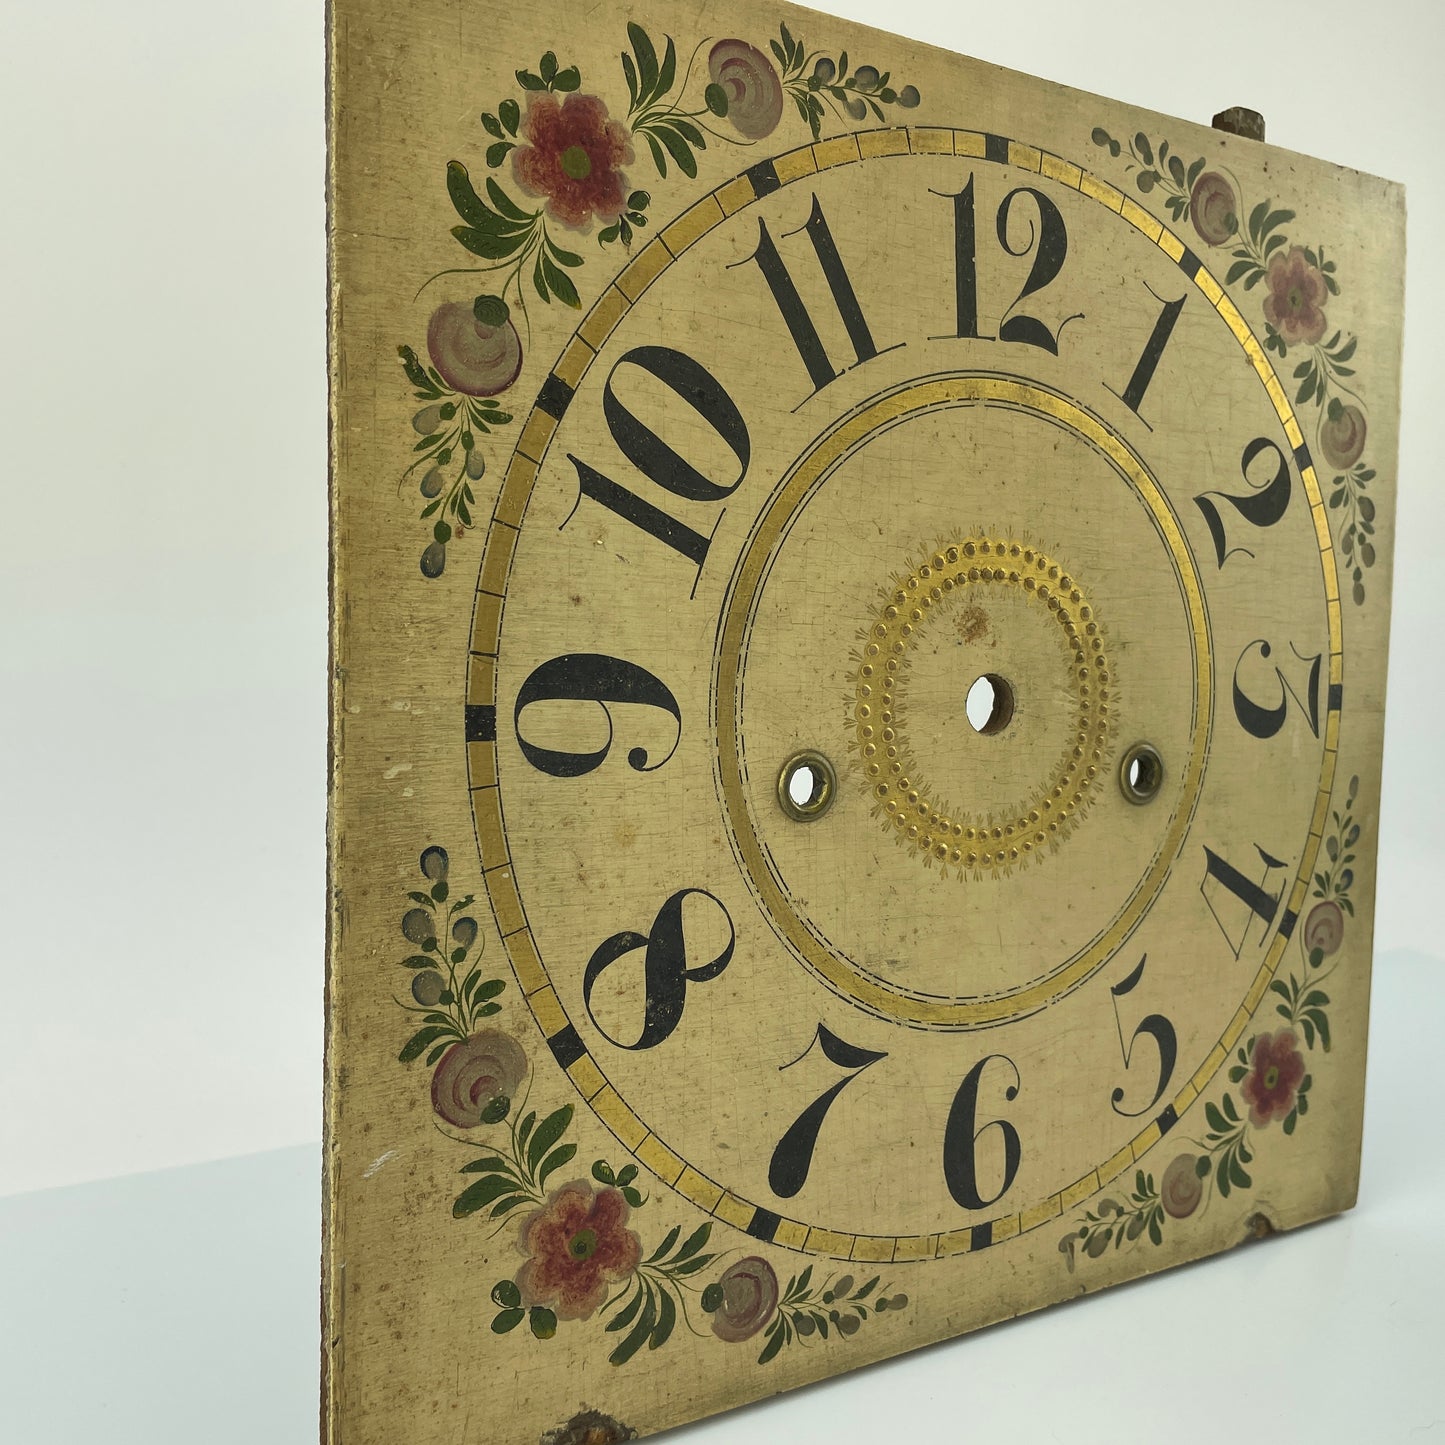 Lot 98- Connecticut Woodworks Shelf Clock Dial Original Condition